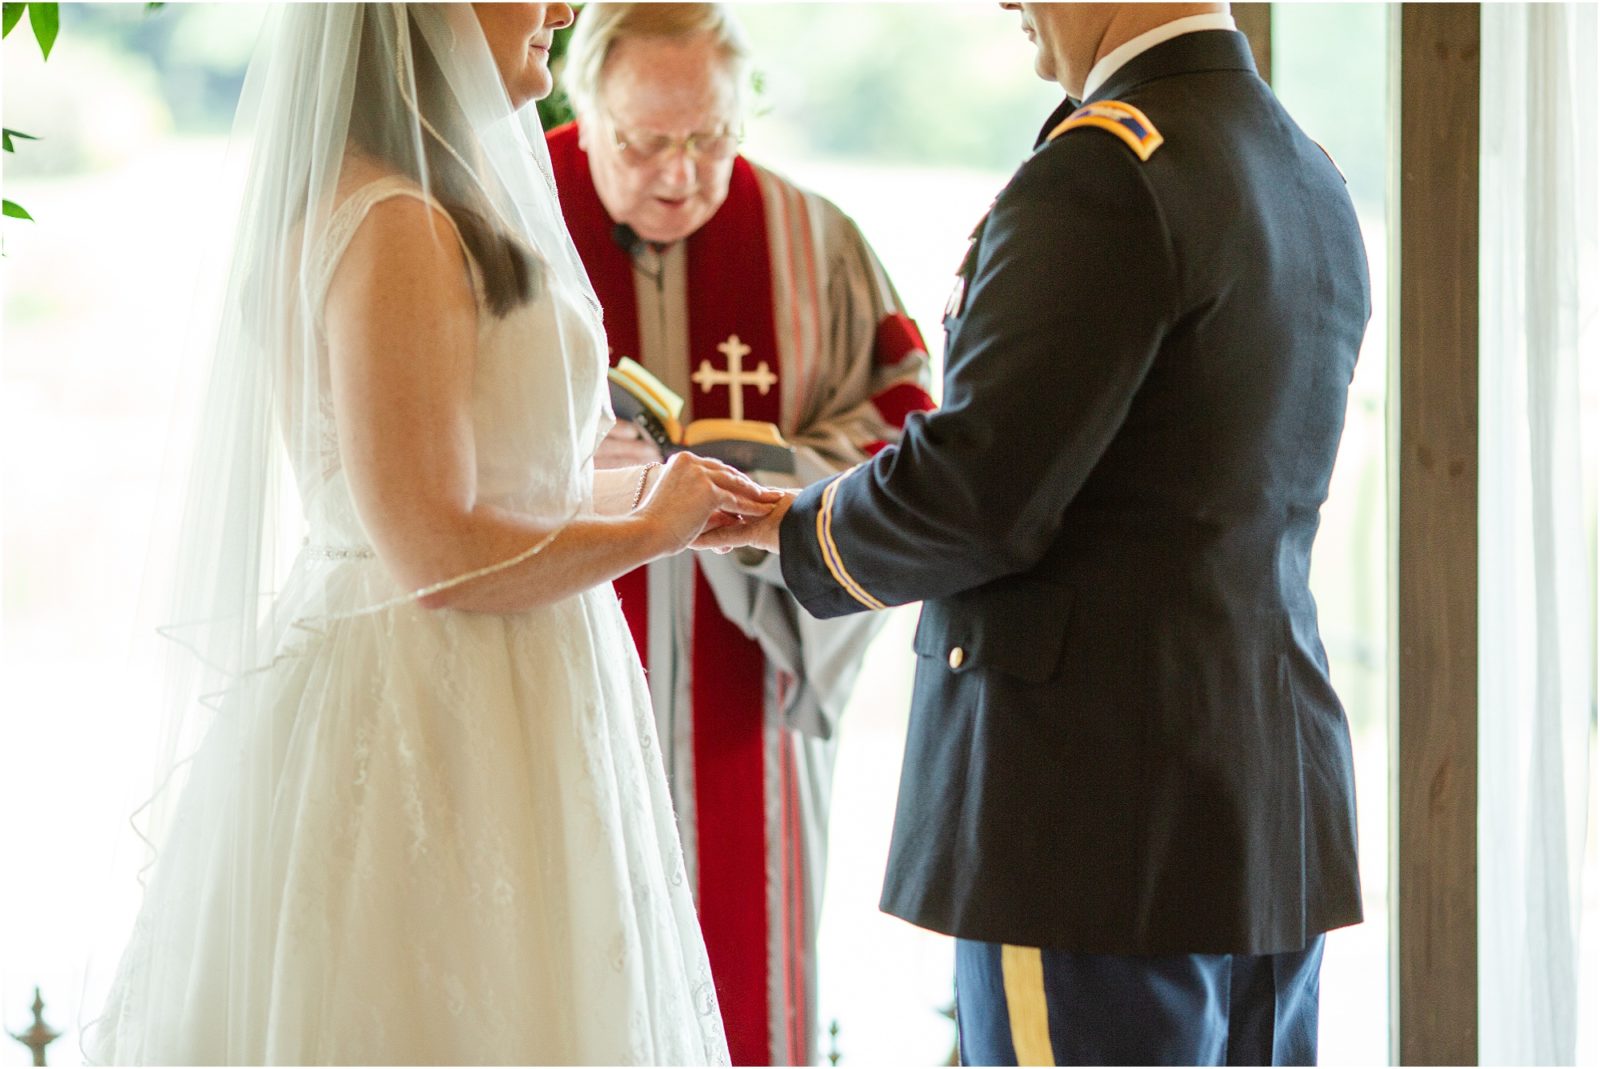 bride puts wedding ring on groom